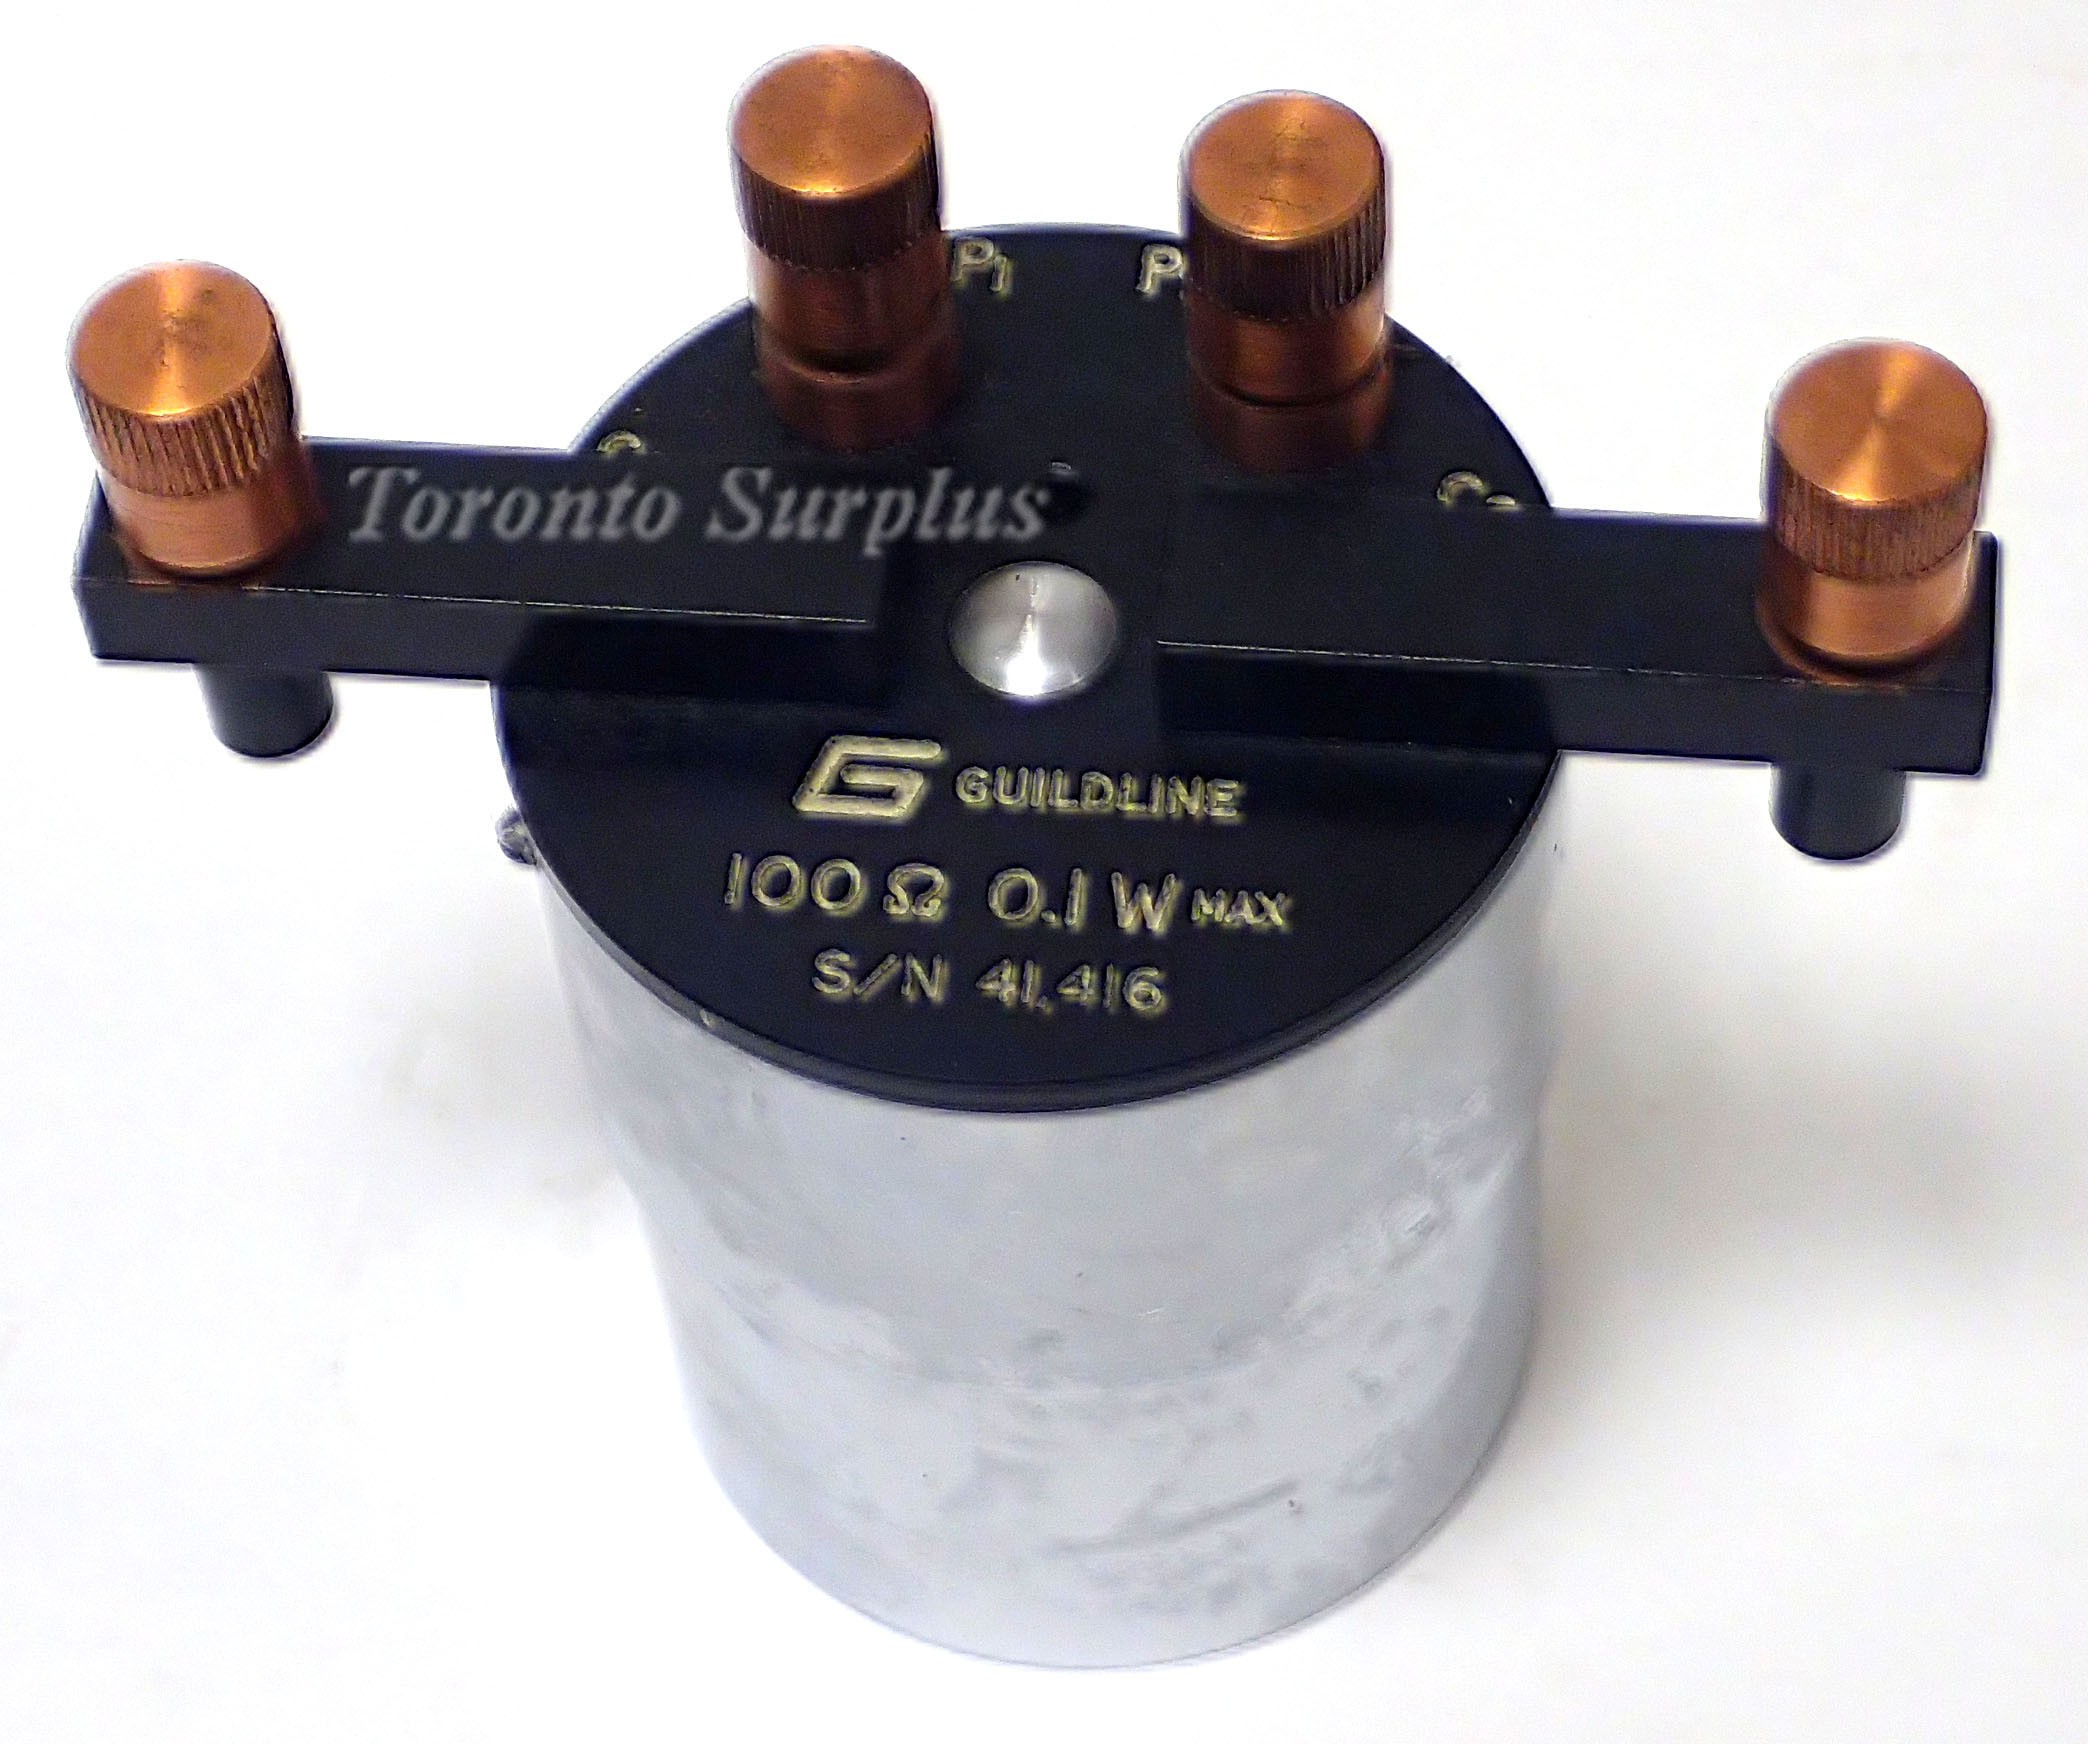 Guildline 9330-100 / 9330 Series Resistor / Resistance Standard 100 ohm, 0.1 W max